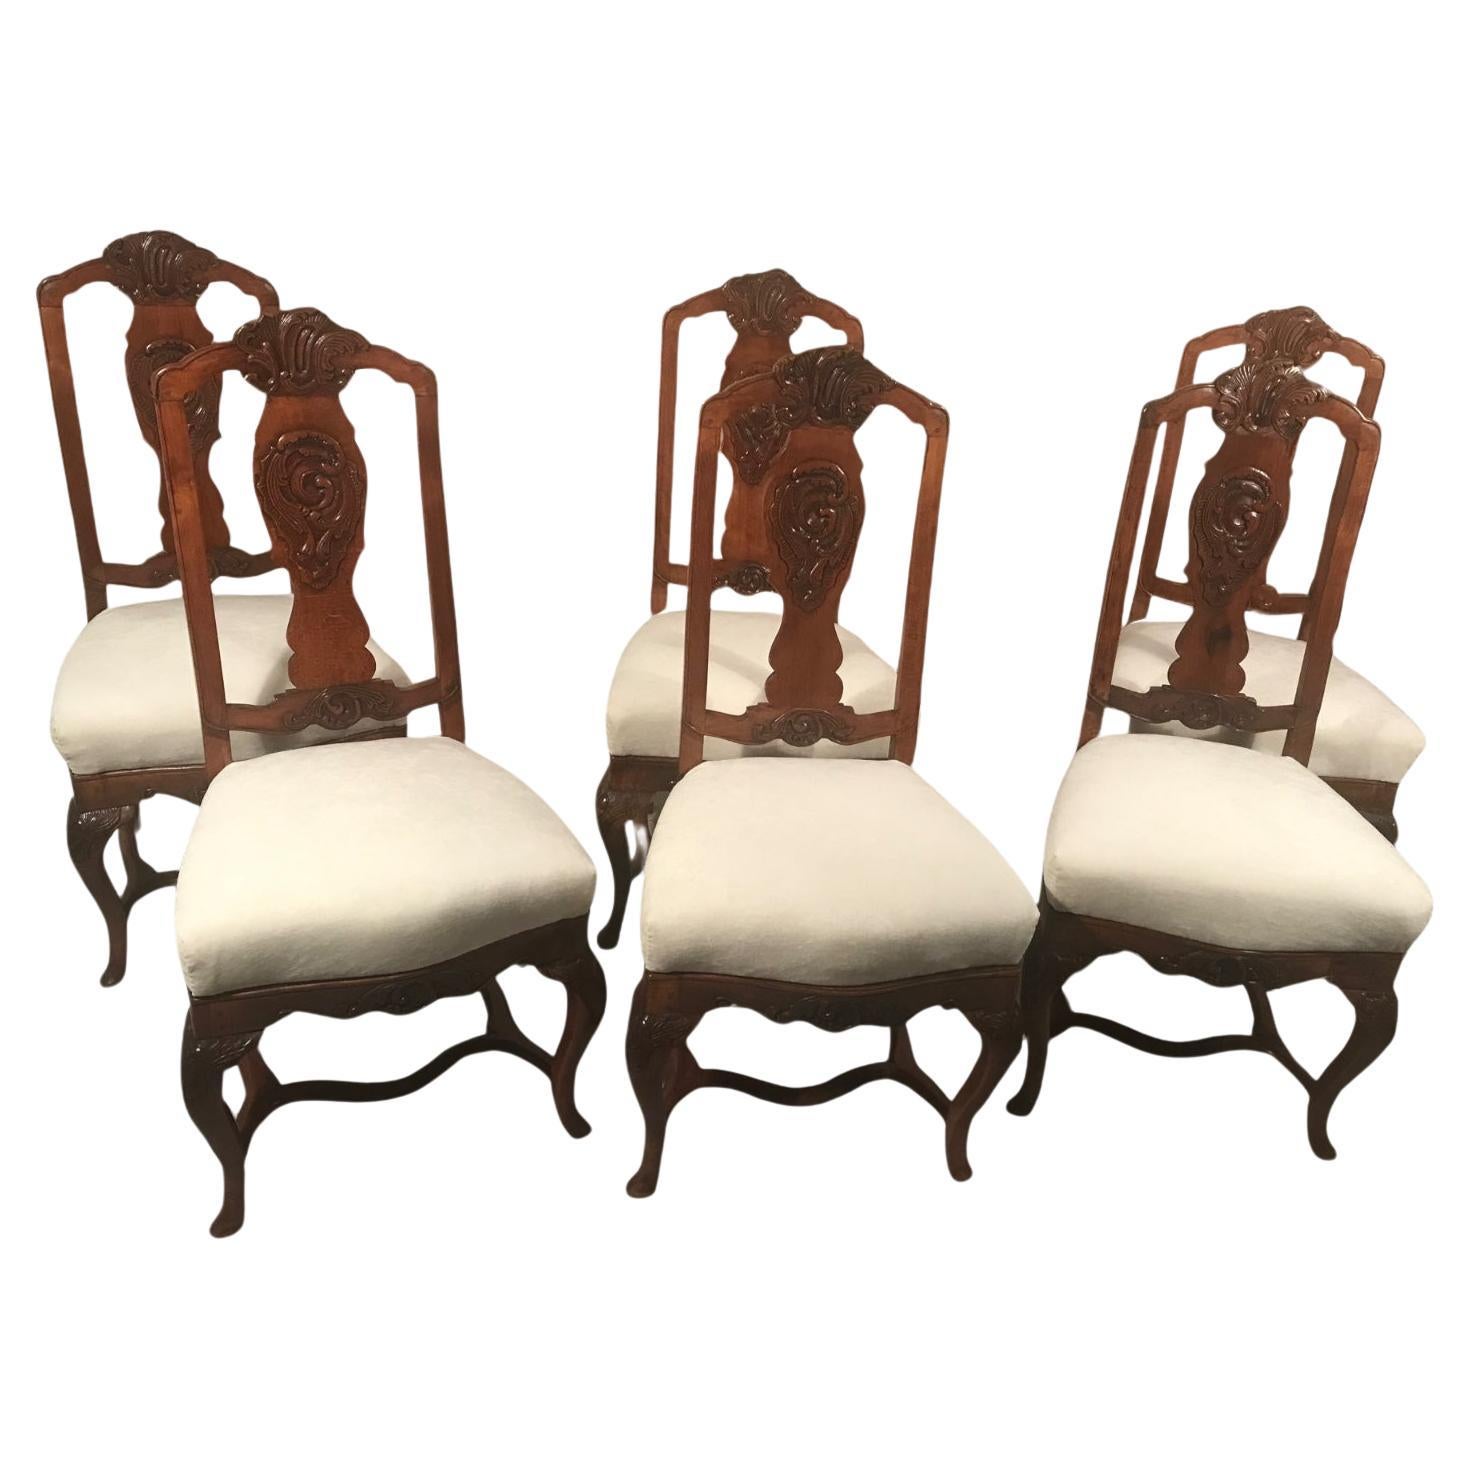 Set of six Original Baroque Chairs, Germany 1750-60